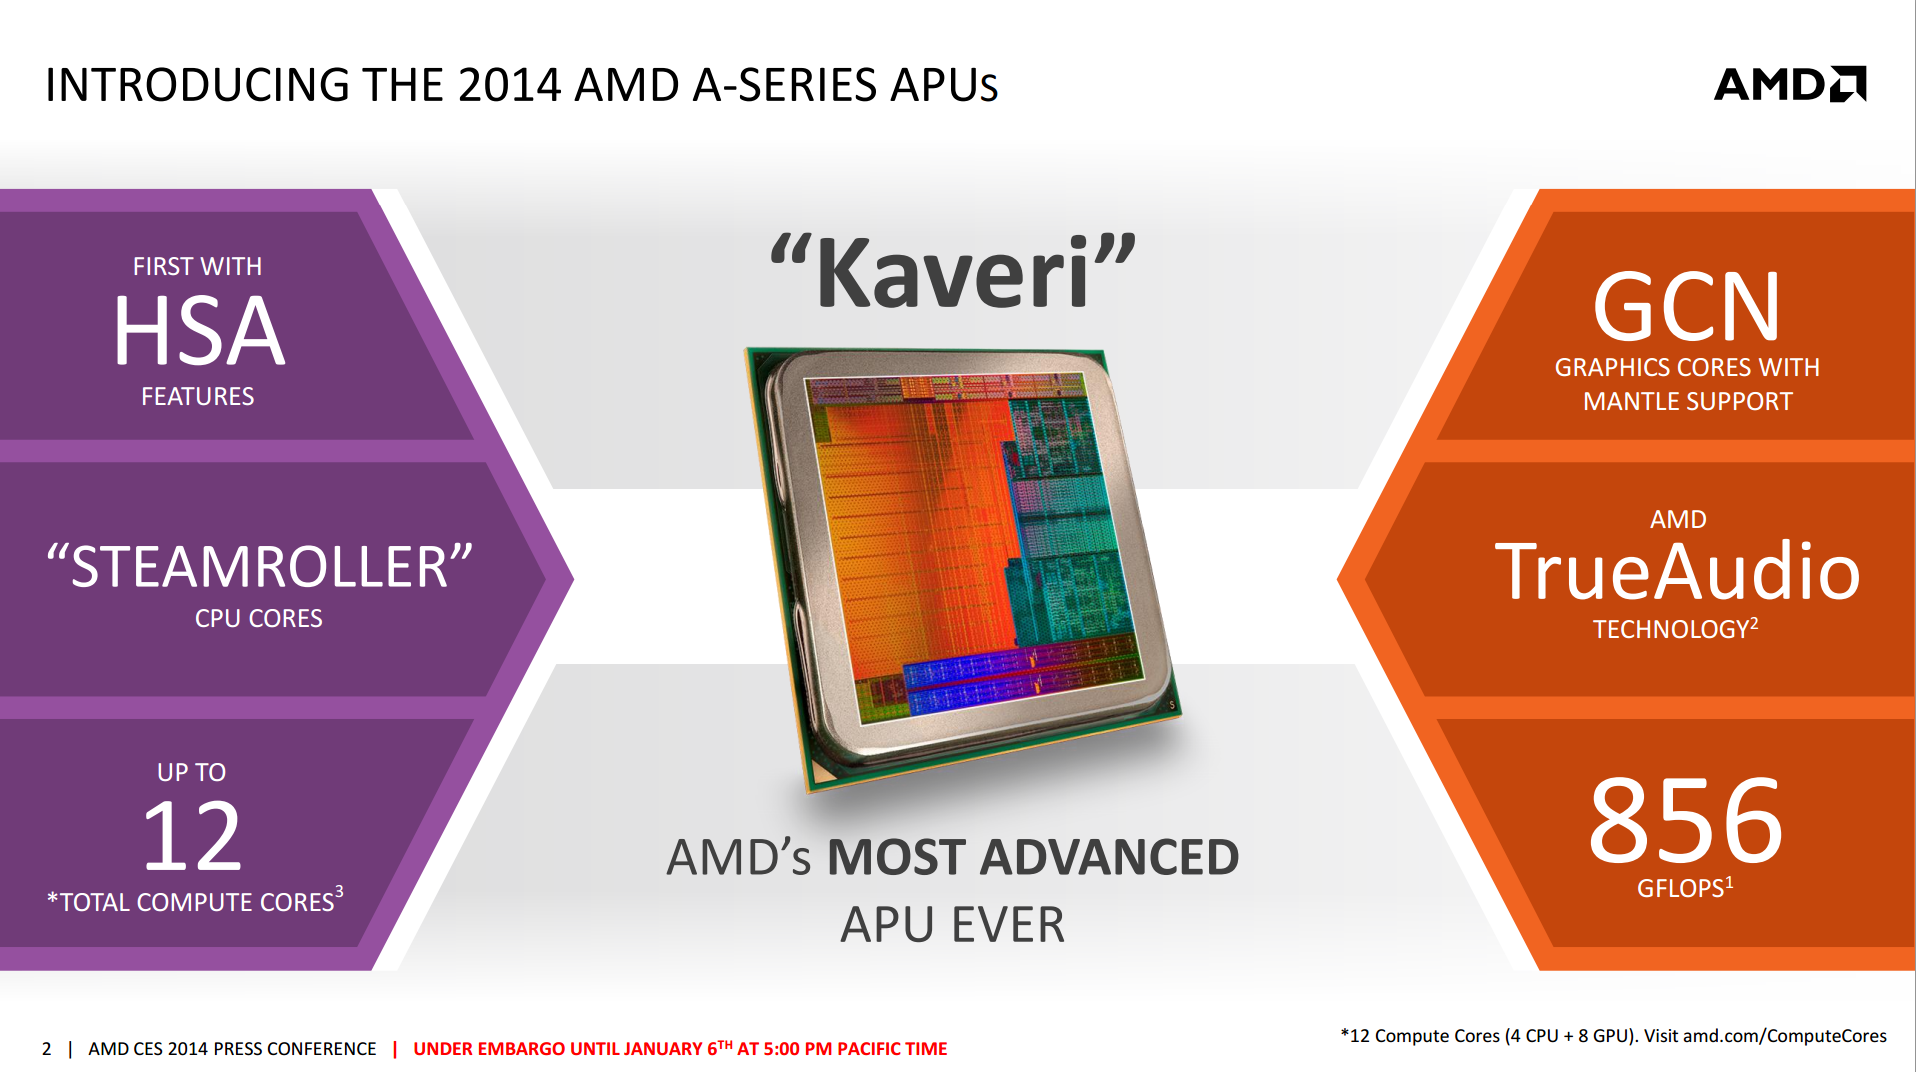 AMD Kaveri A-Series APU 1